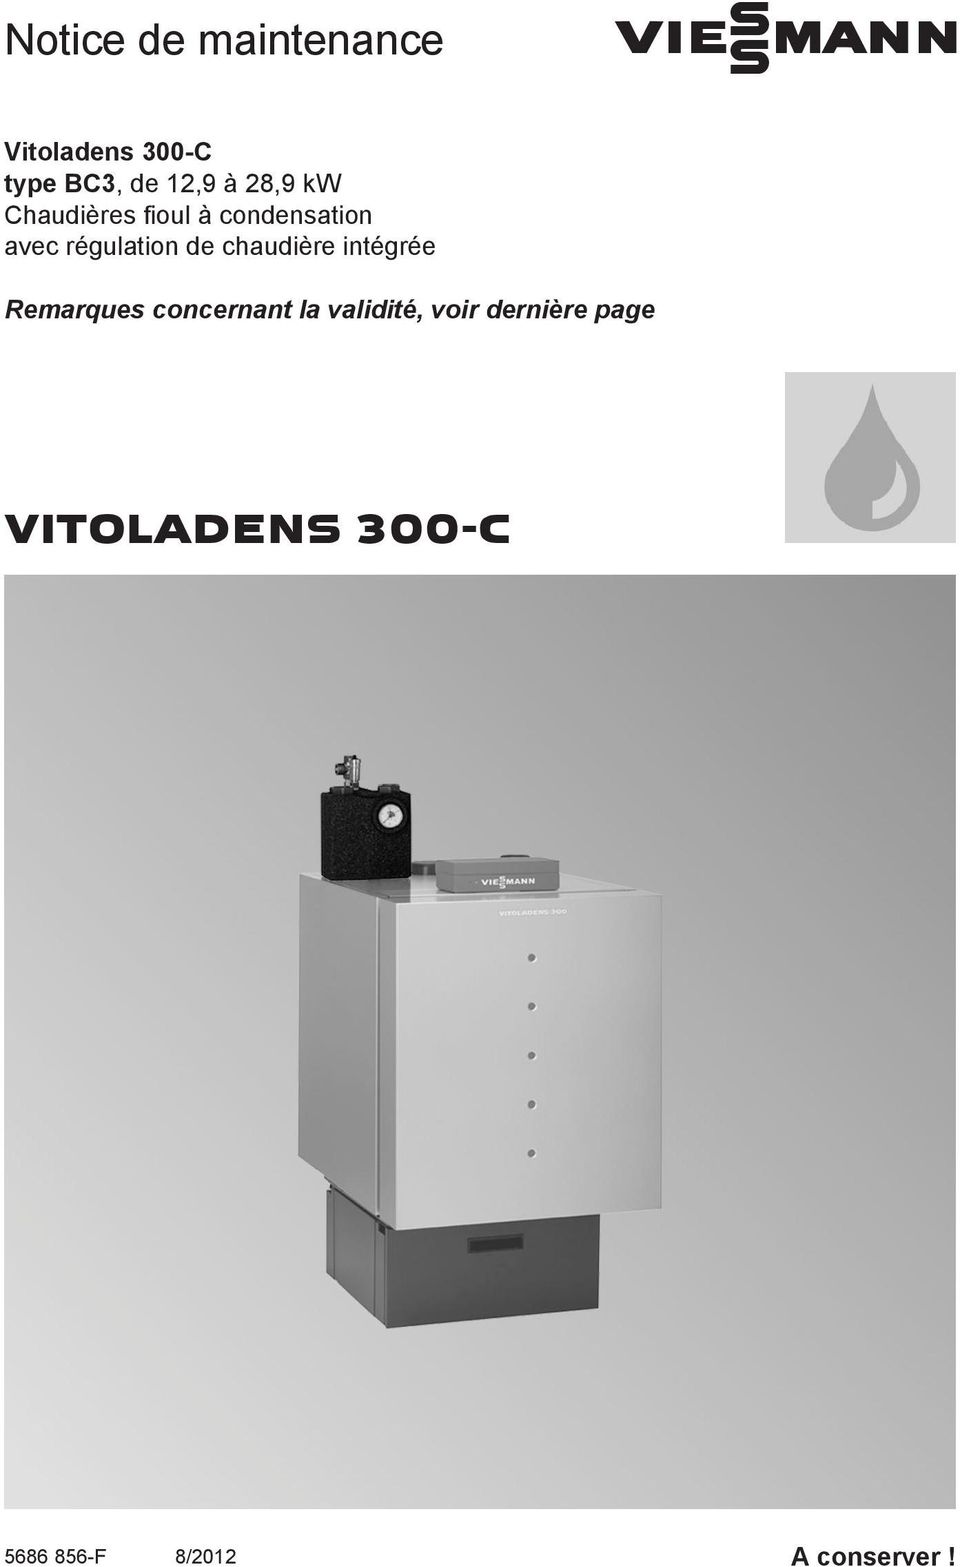 Viesmann Notice De Maintenance Vitoladens 300 C Pdf Free Download